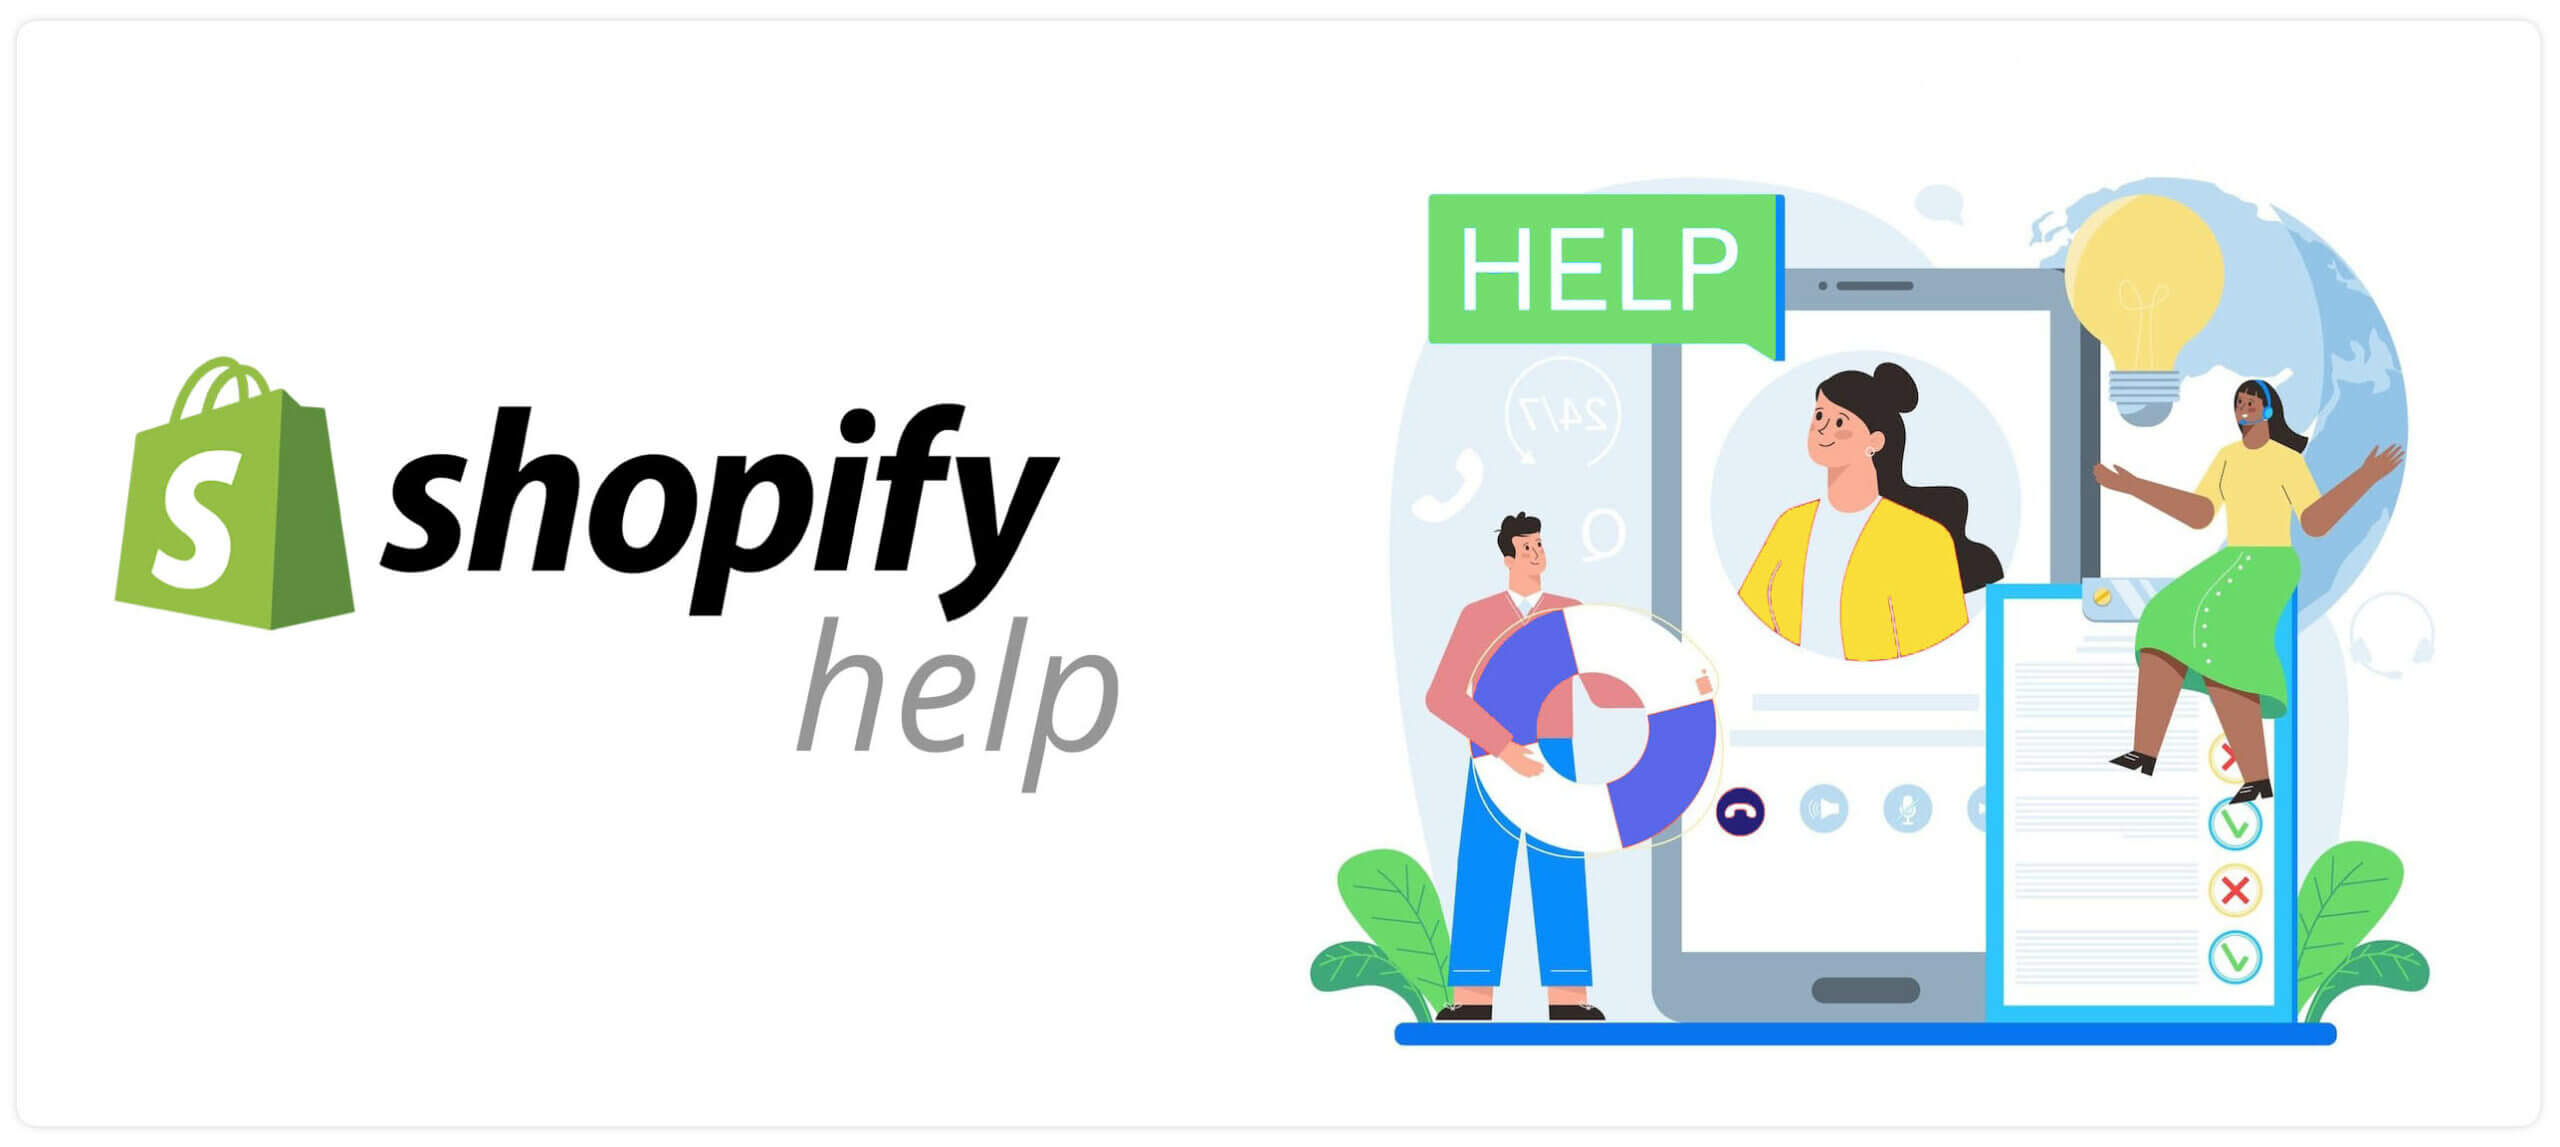 Shopify Help Center